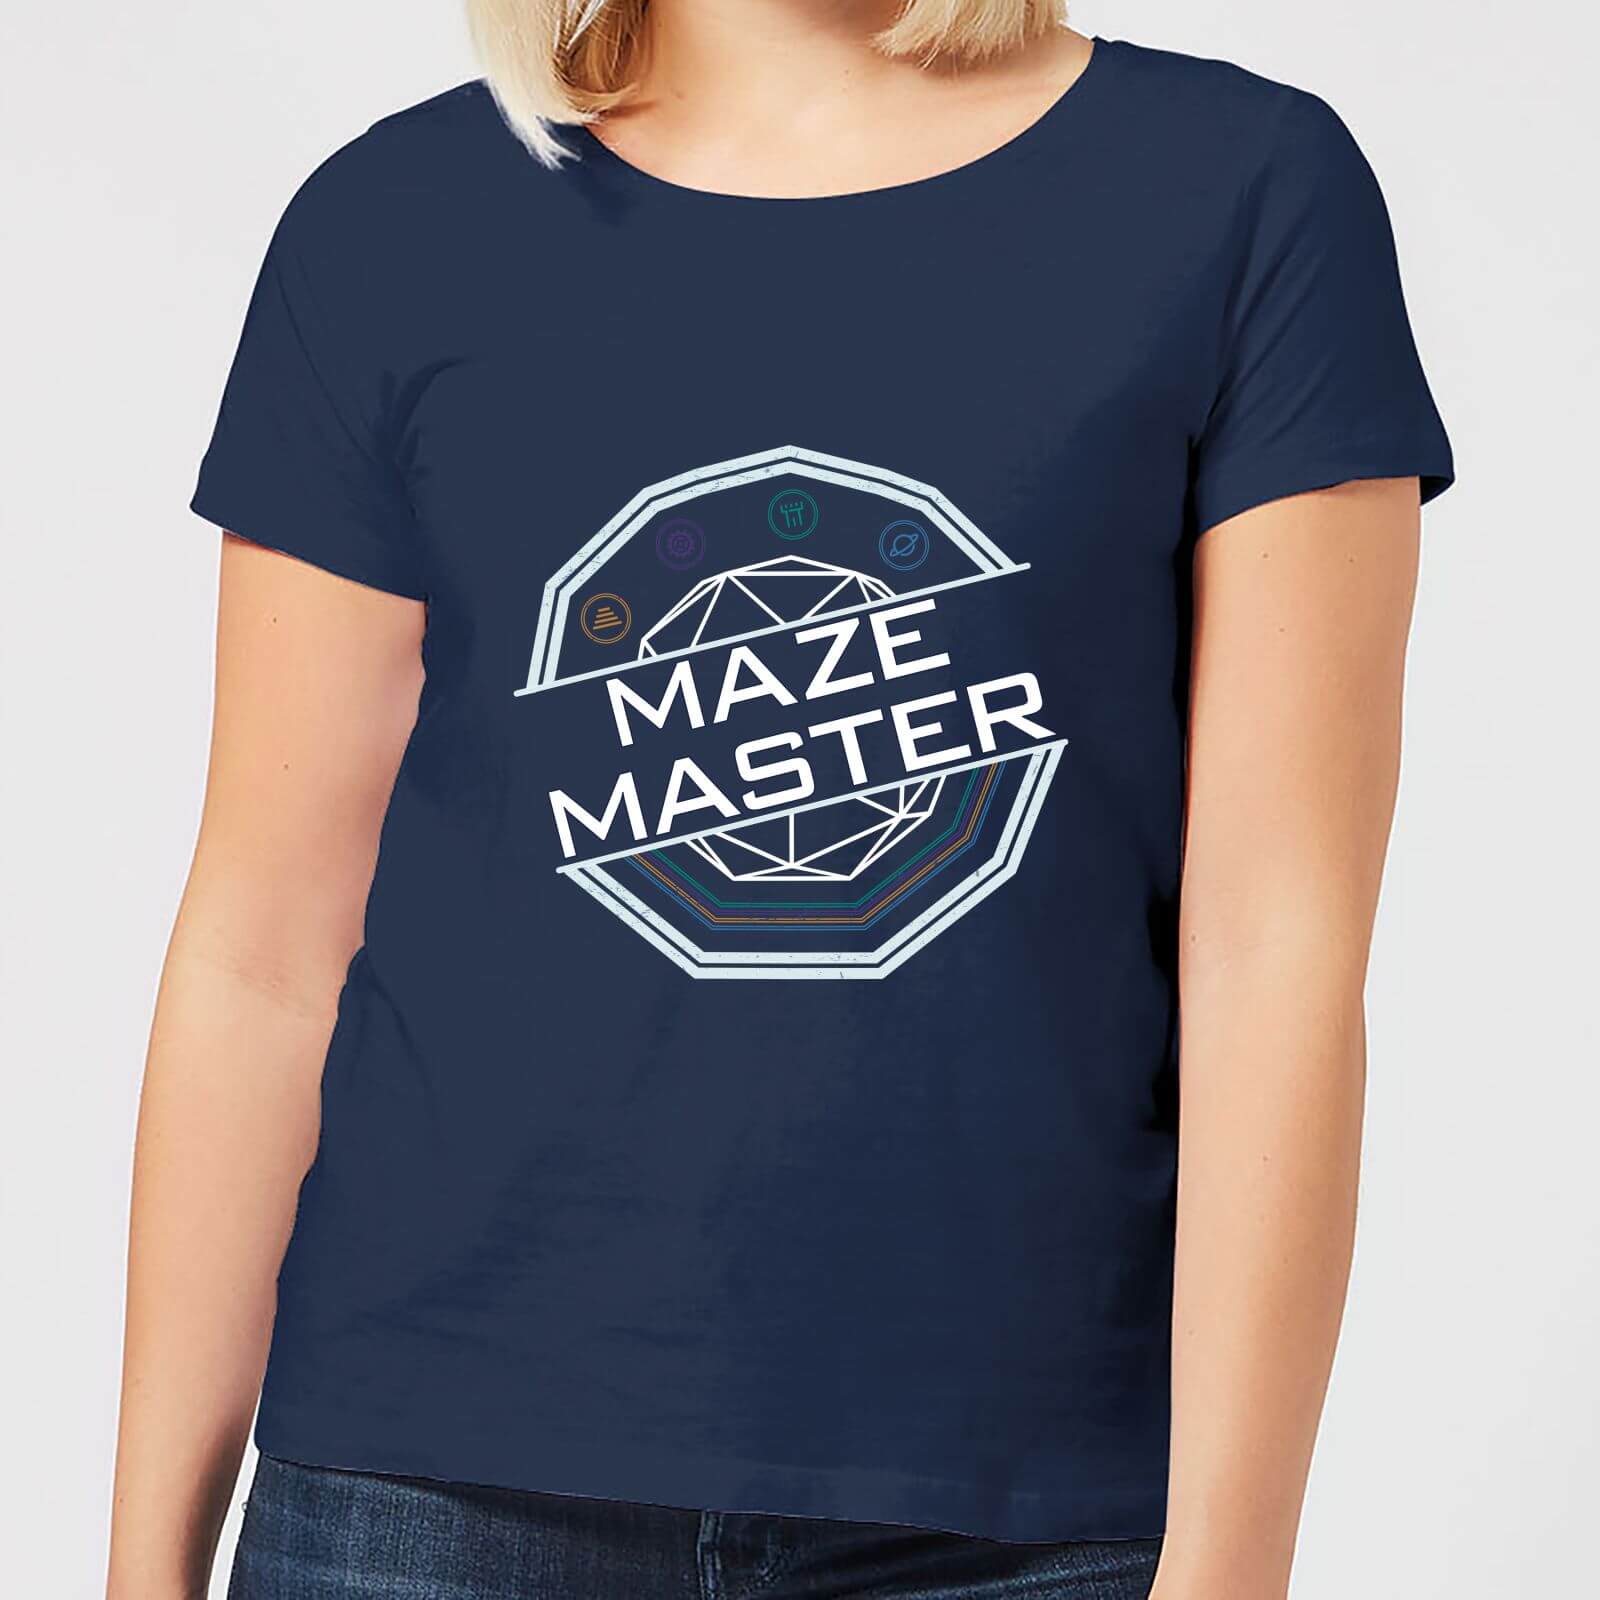 Crystal Maze Maze Master Women's T-Shirt - Navy - S - Navy